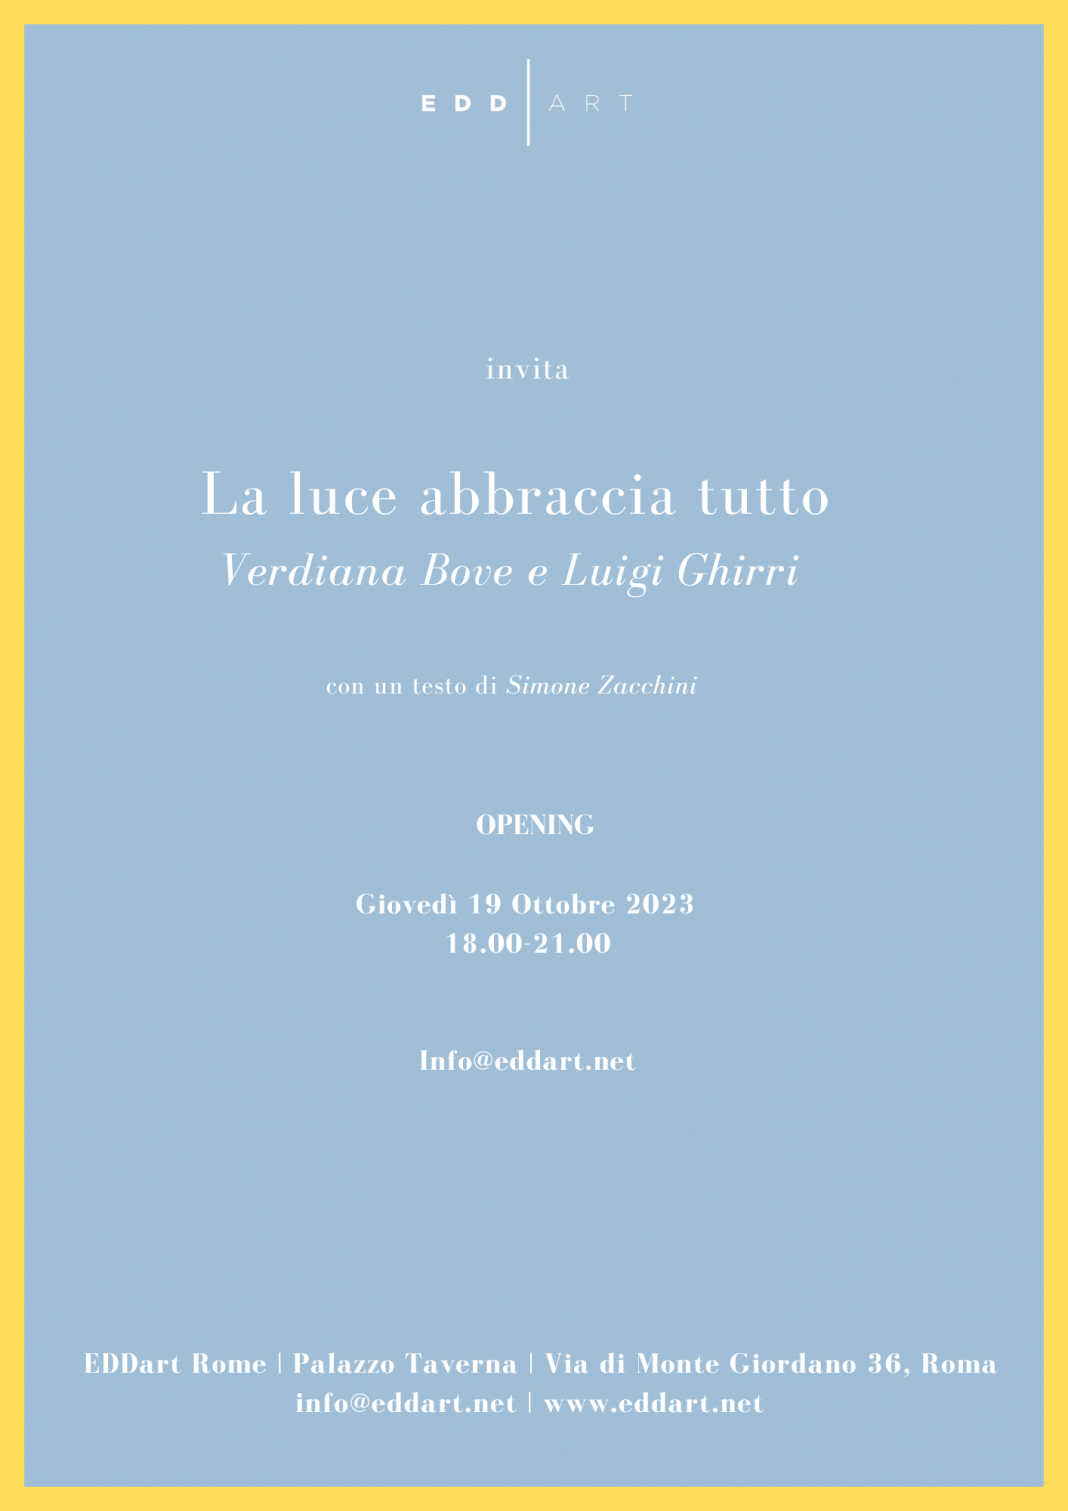 Verdiana Bove / Luigi Ghirri – La luce abbraccia tuttohttps://www.exibart.com/repository/media/formidable/11/img/bd6/La-luce-abbraccia-tutto-Invito-1068x1511.png